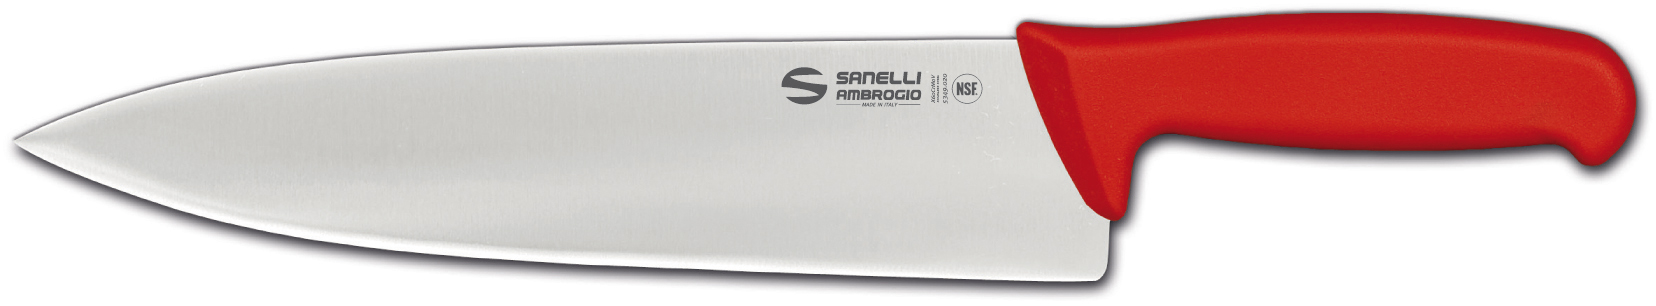 S349.026R SUPRA CHEFS KNIFE RED HANDLE 26CM LAMA SANELLI AMBROGIO